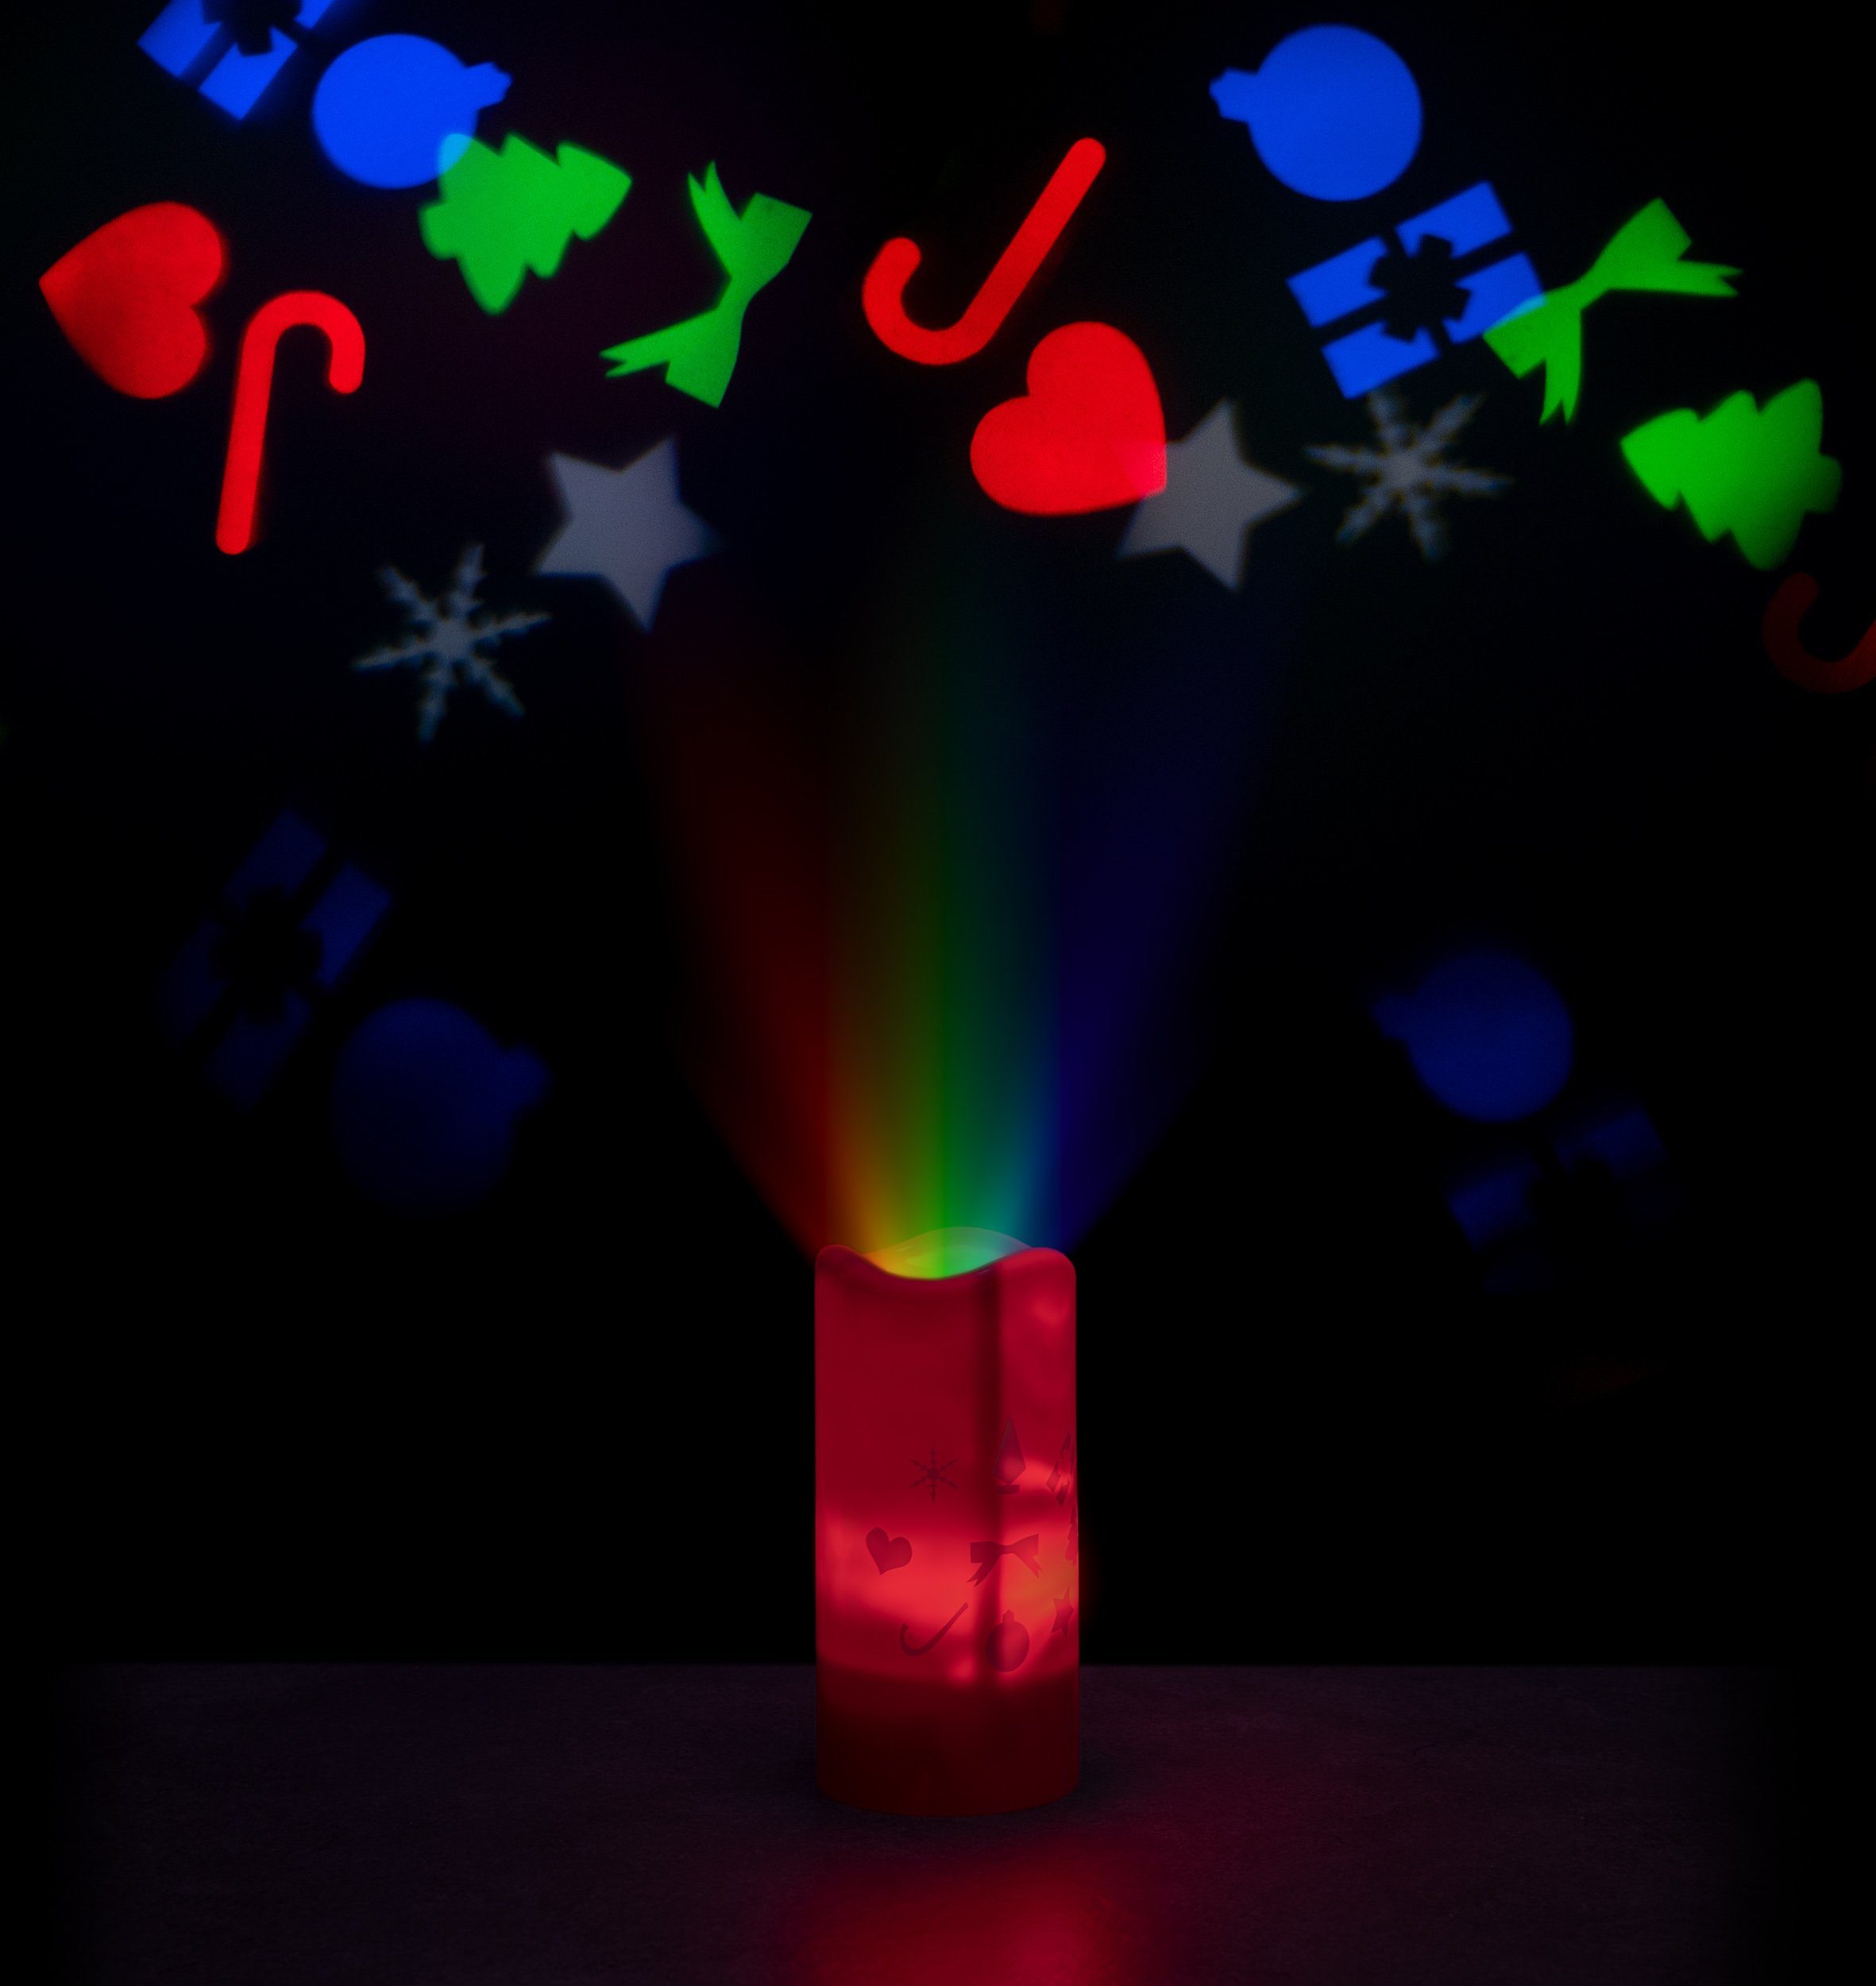 kamelshopping LED-Kerze LED Kerze mit Projektor, batteriebetrieben, ca. 15  cm hoch, verschiedene Weihnachtsmotive wie Sternenhimmel, Rentierschlitten  etc.